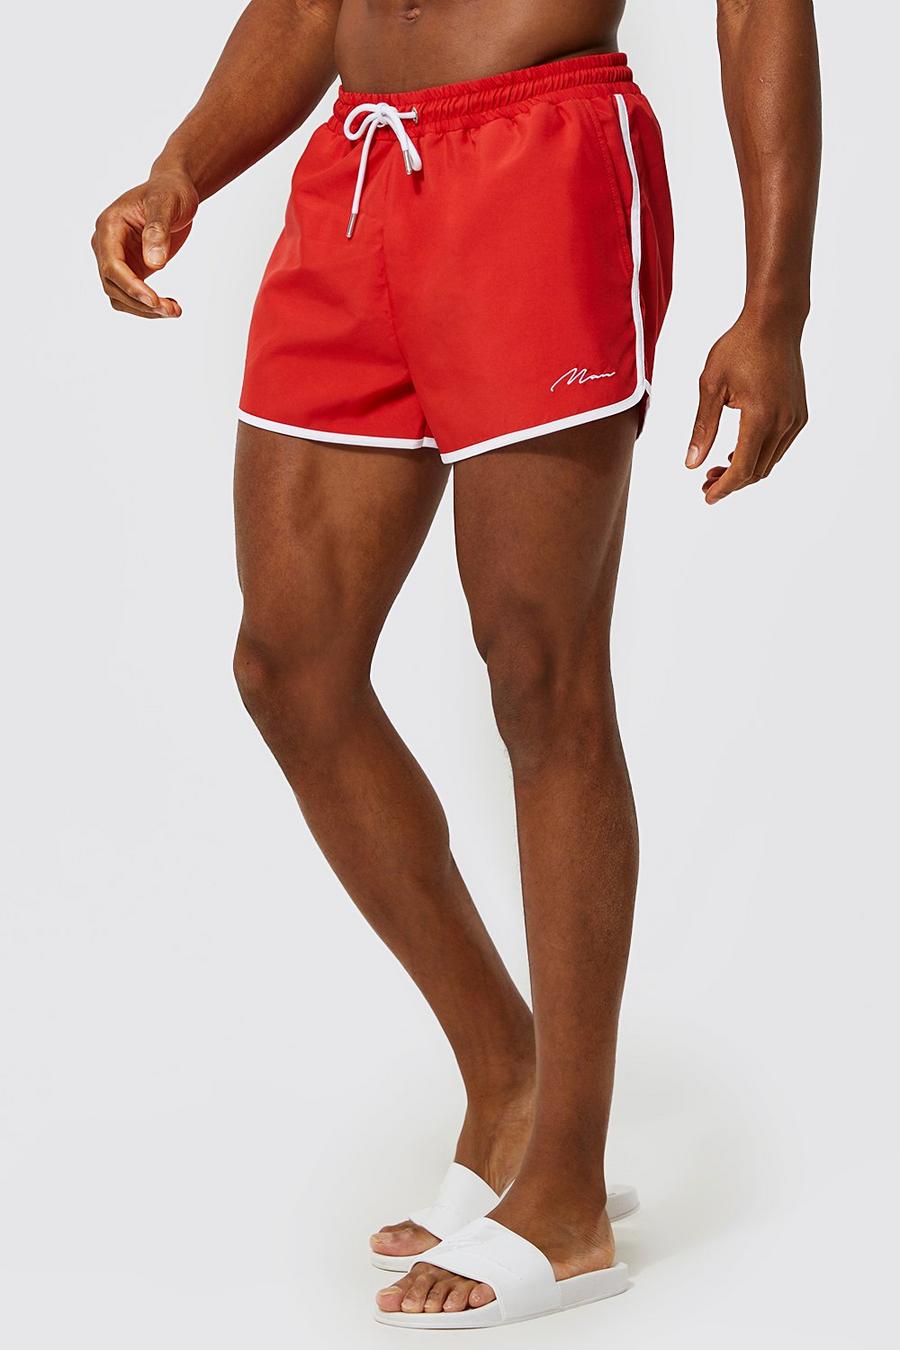 Red rosso שורט בגד ים בסגנון מכנסי ריצה עם חתימת Man מבד ממוחזר